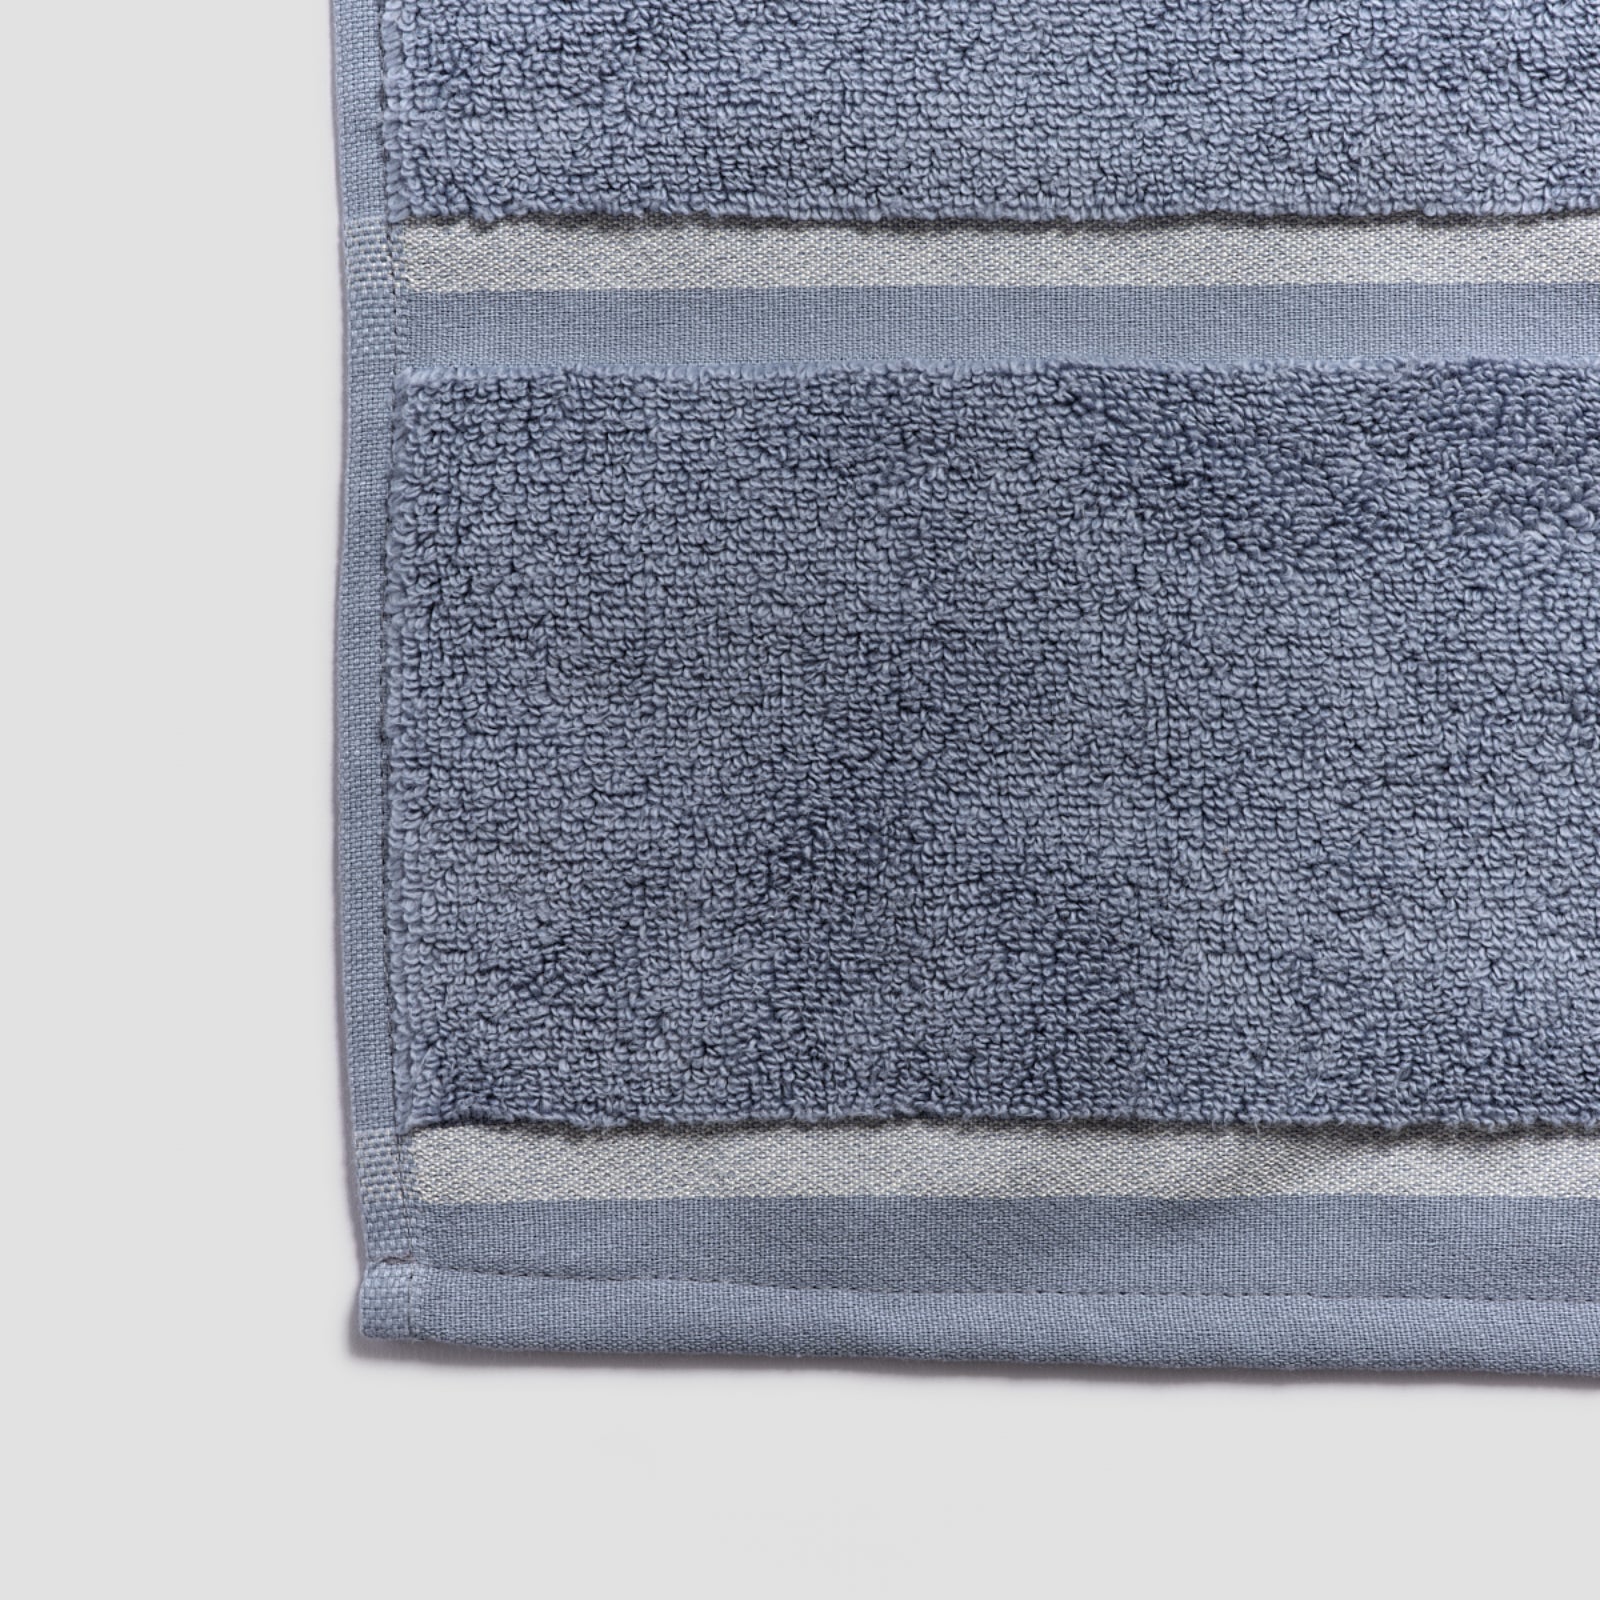 NEW Martha Stewart Jacquard 2 Bath Towel Set Towels Faded Denim Blue White  | eBay